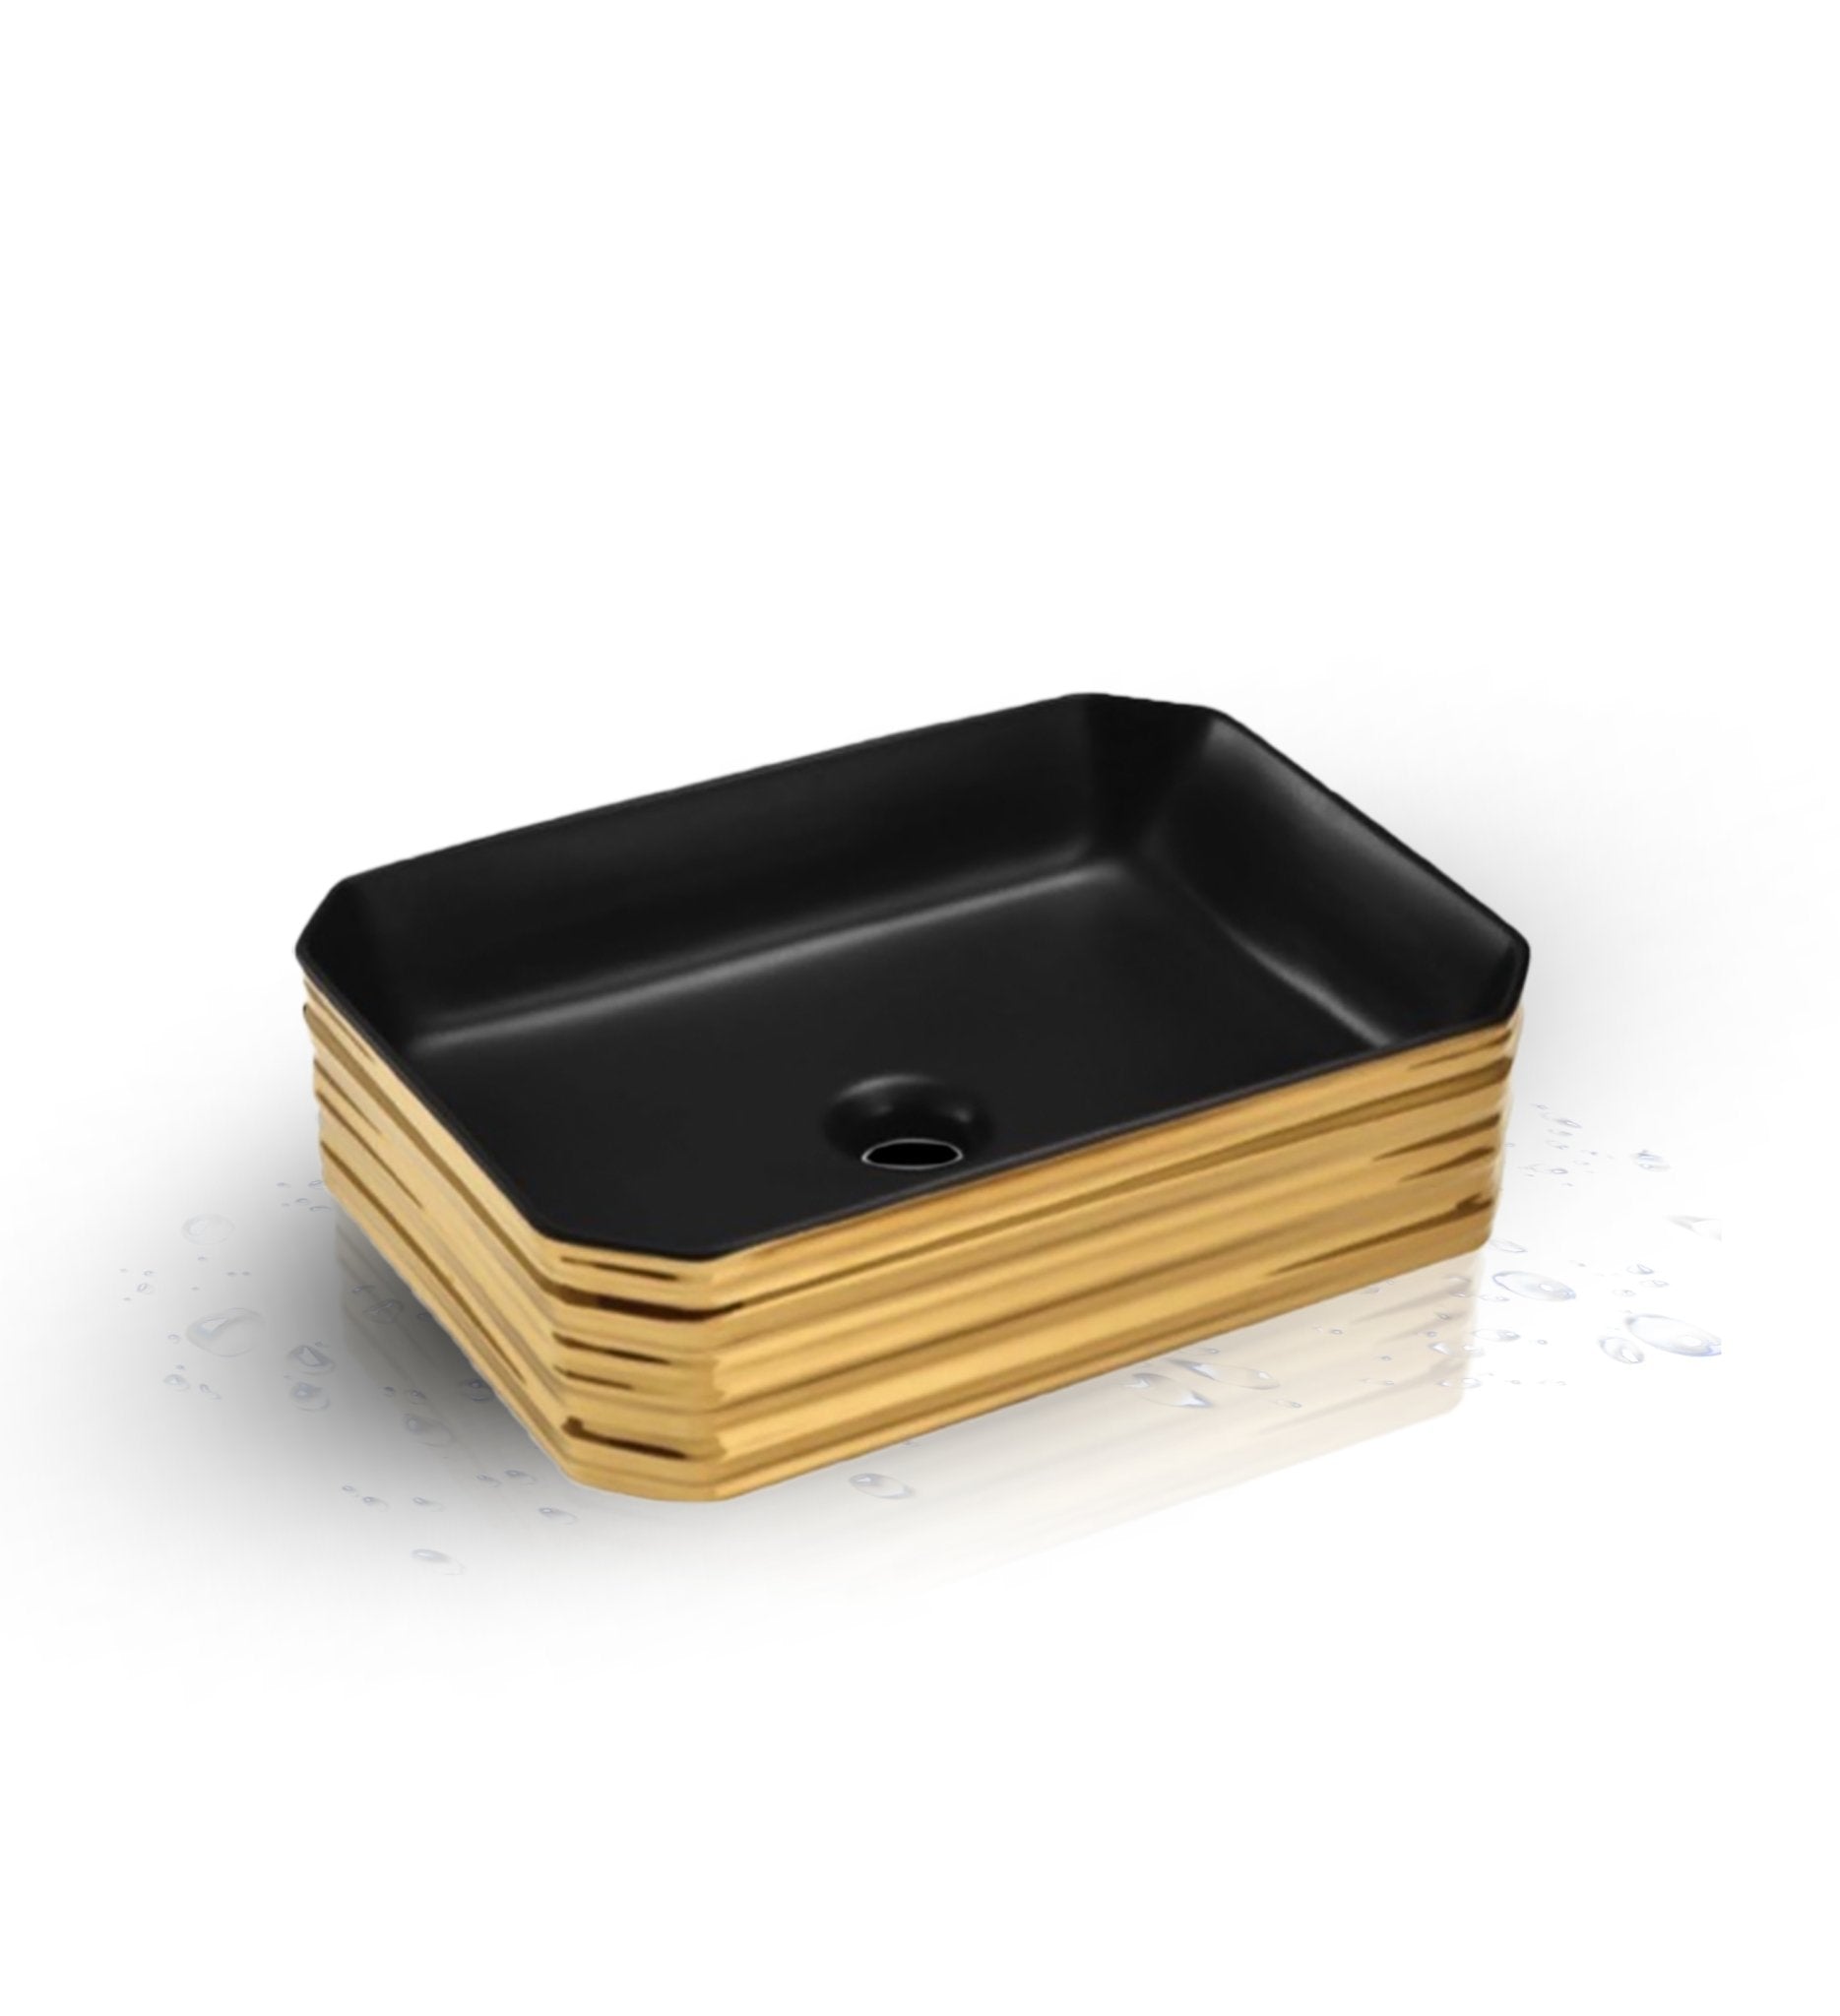 InArt Rectangle Bathroom Ceramic Vessel Sink Art Basin in Matt Black Gold Color - InArt-Studio-USA